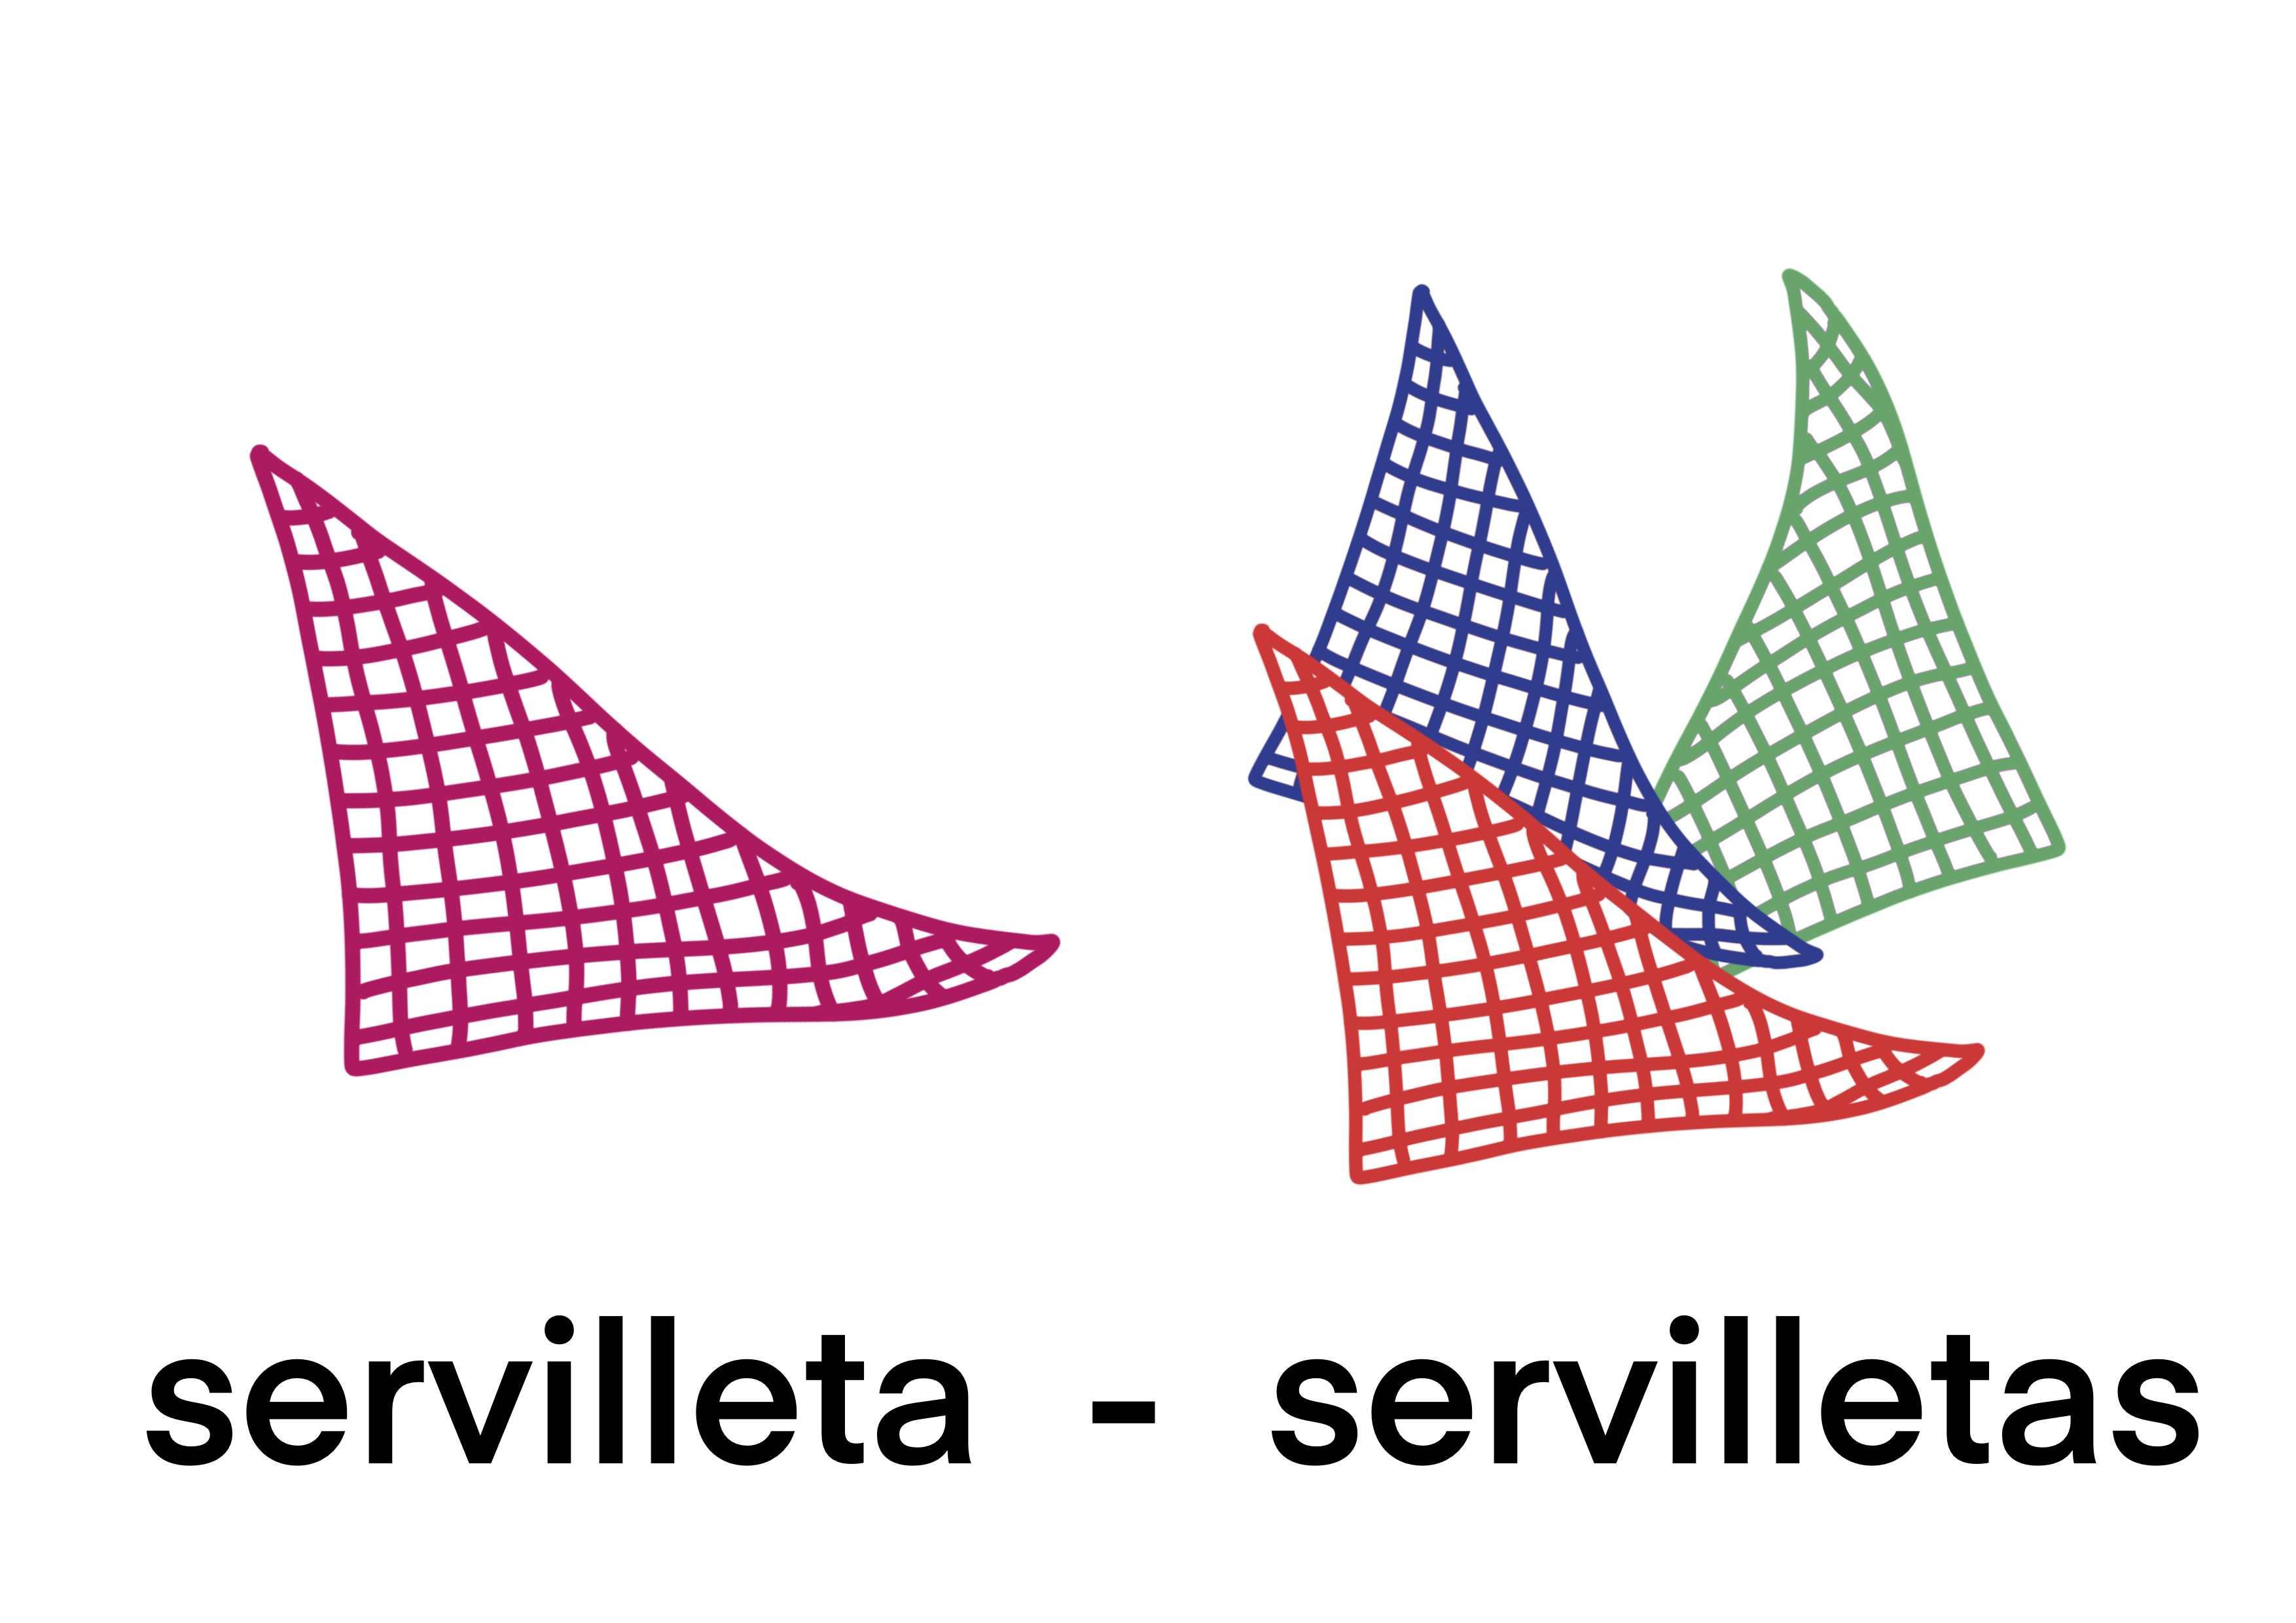 Servilleta - servilletas